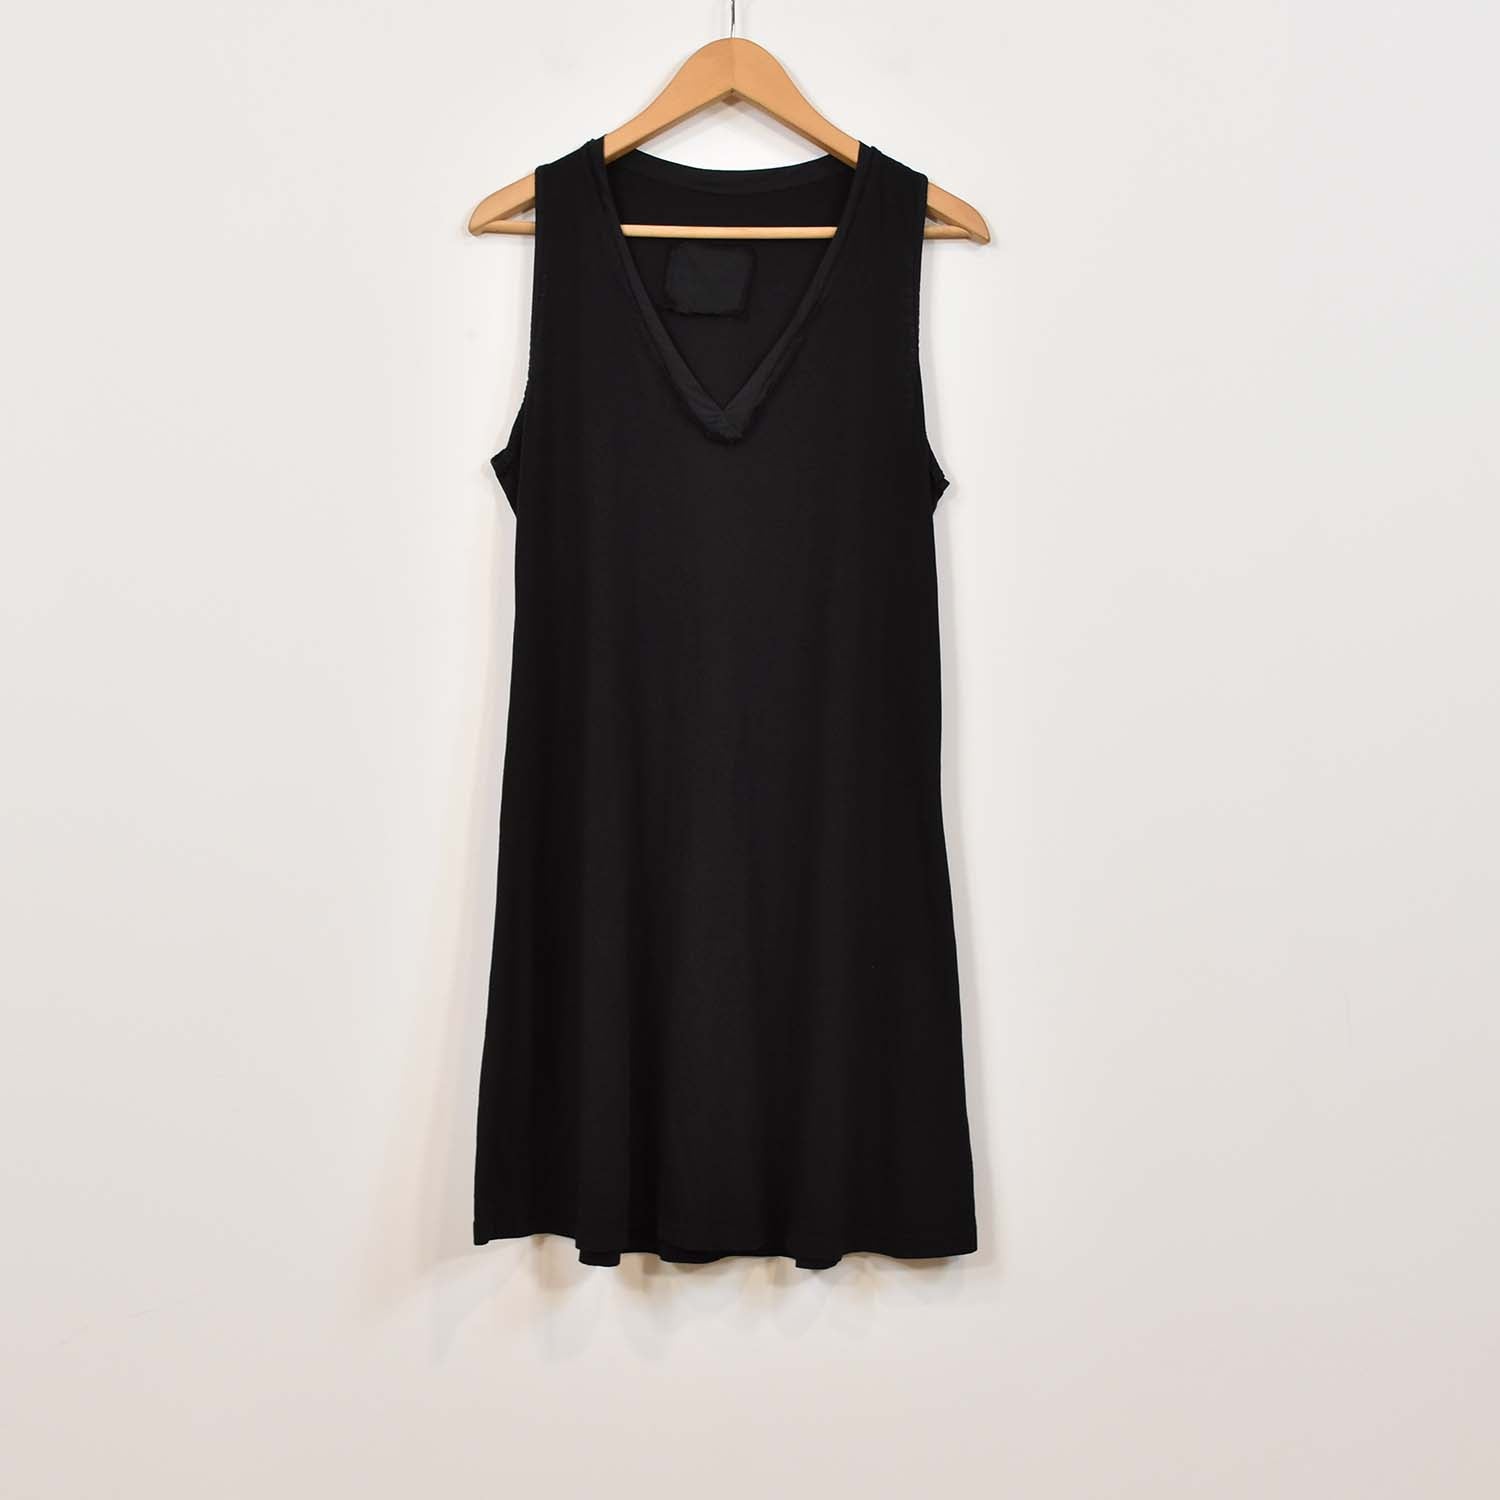 Black short frayed dress